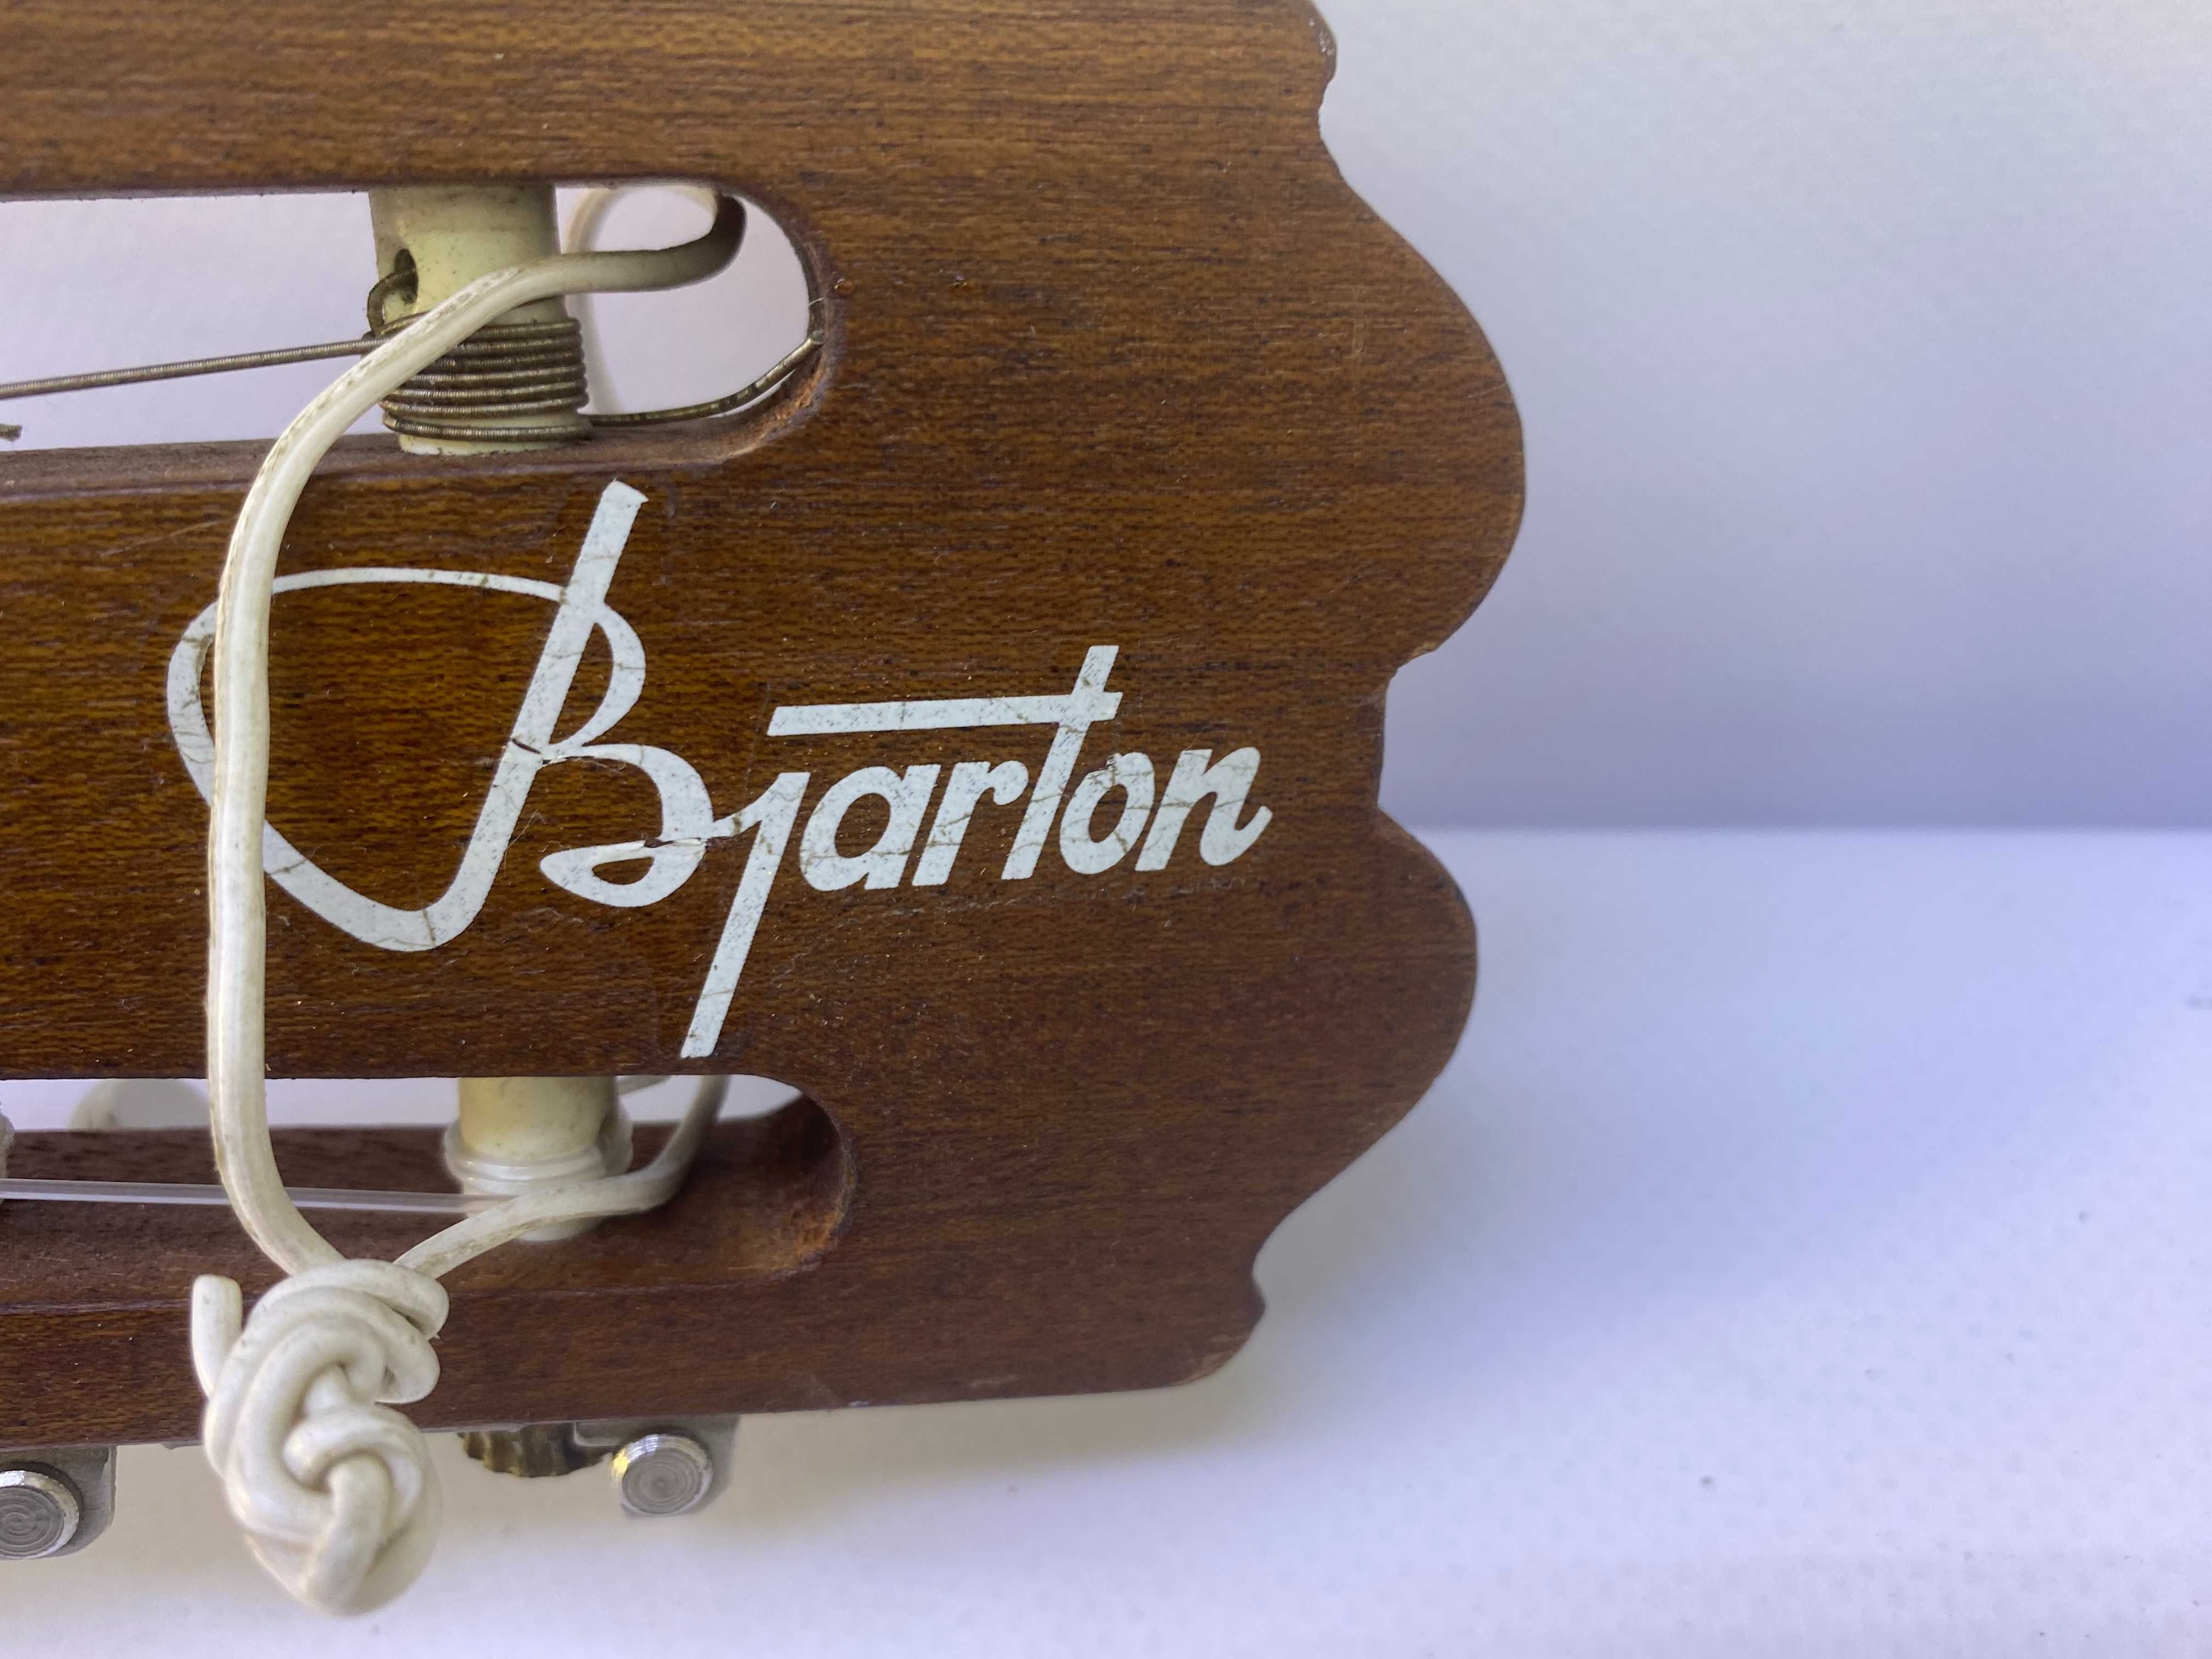 Gitara Bjarton  made in sweden